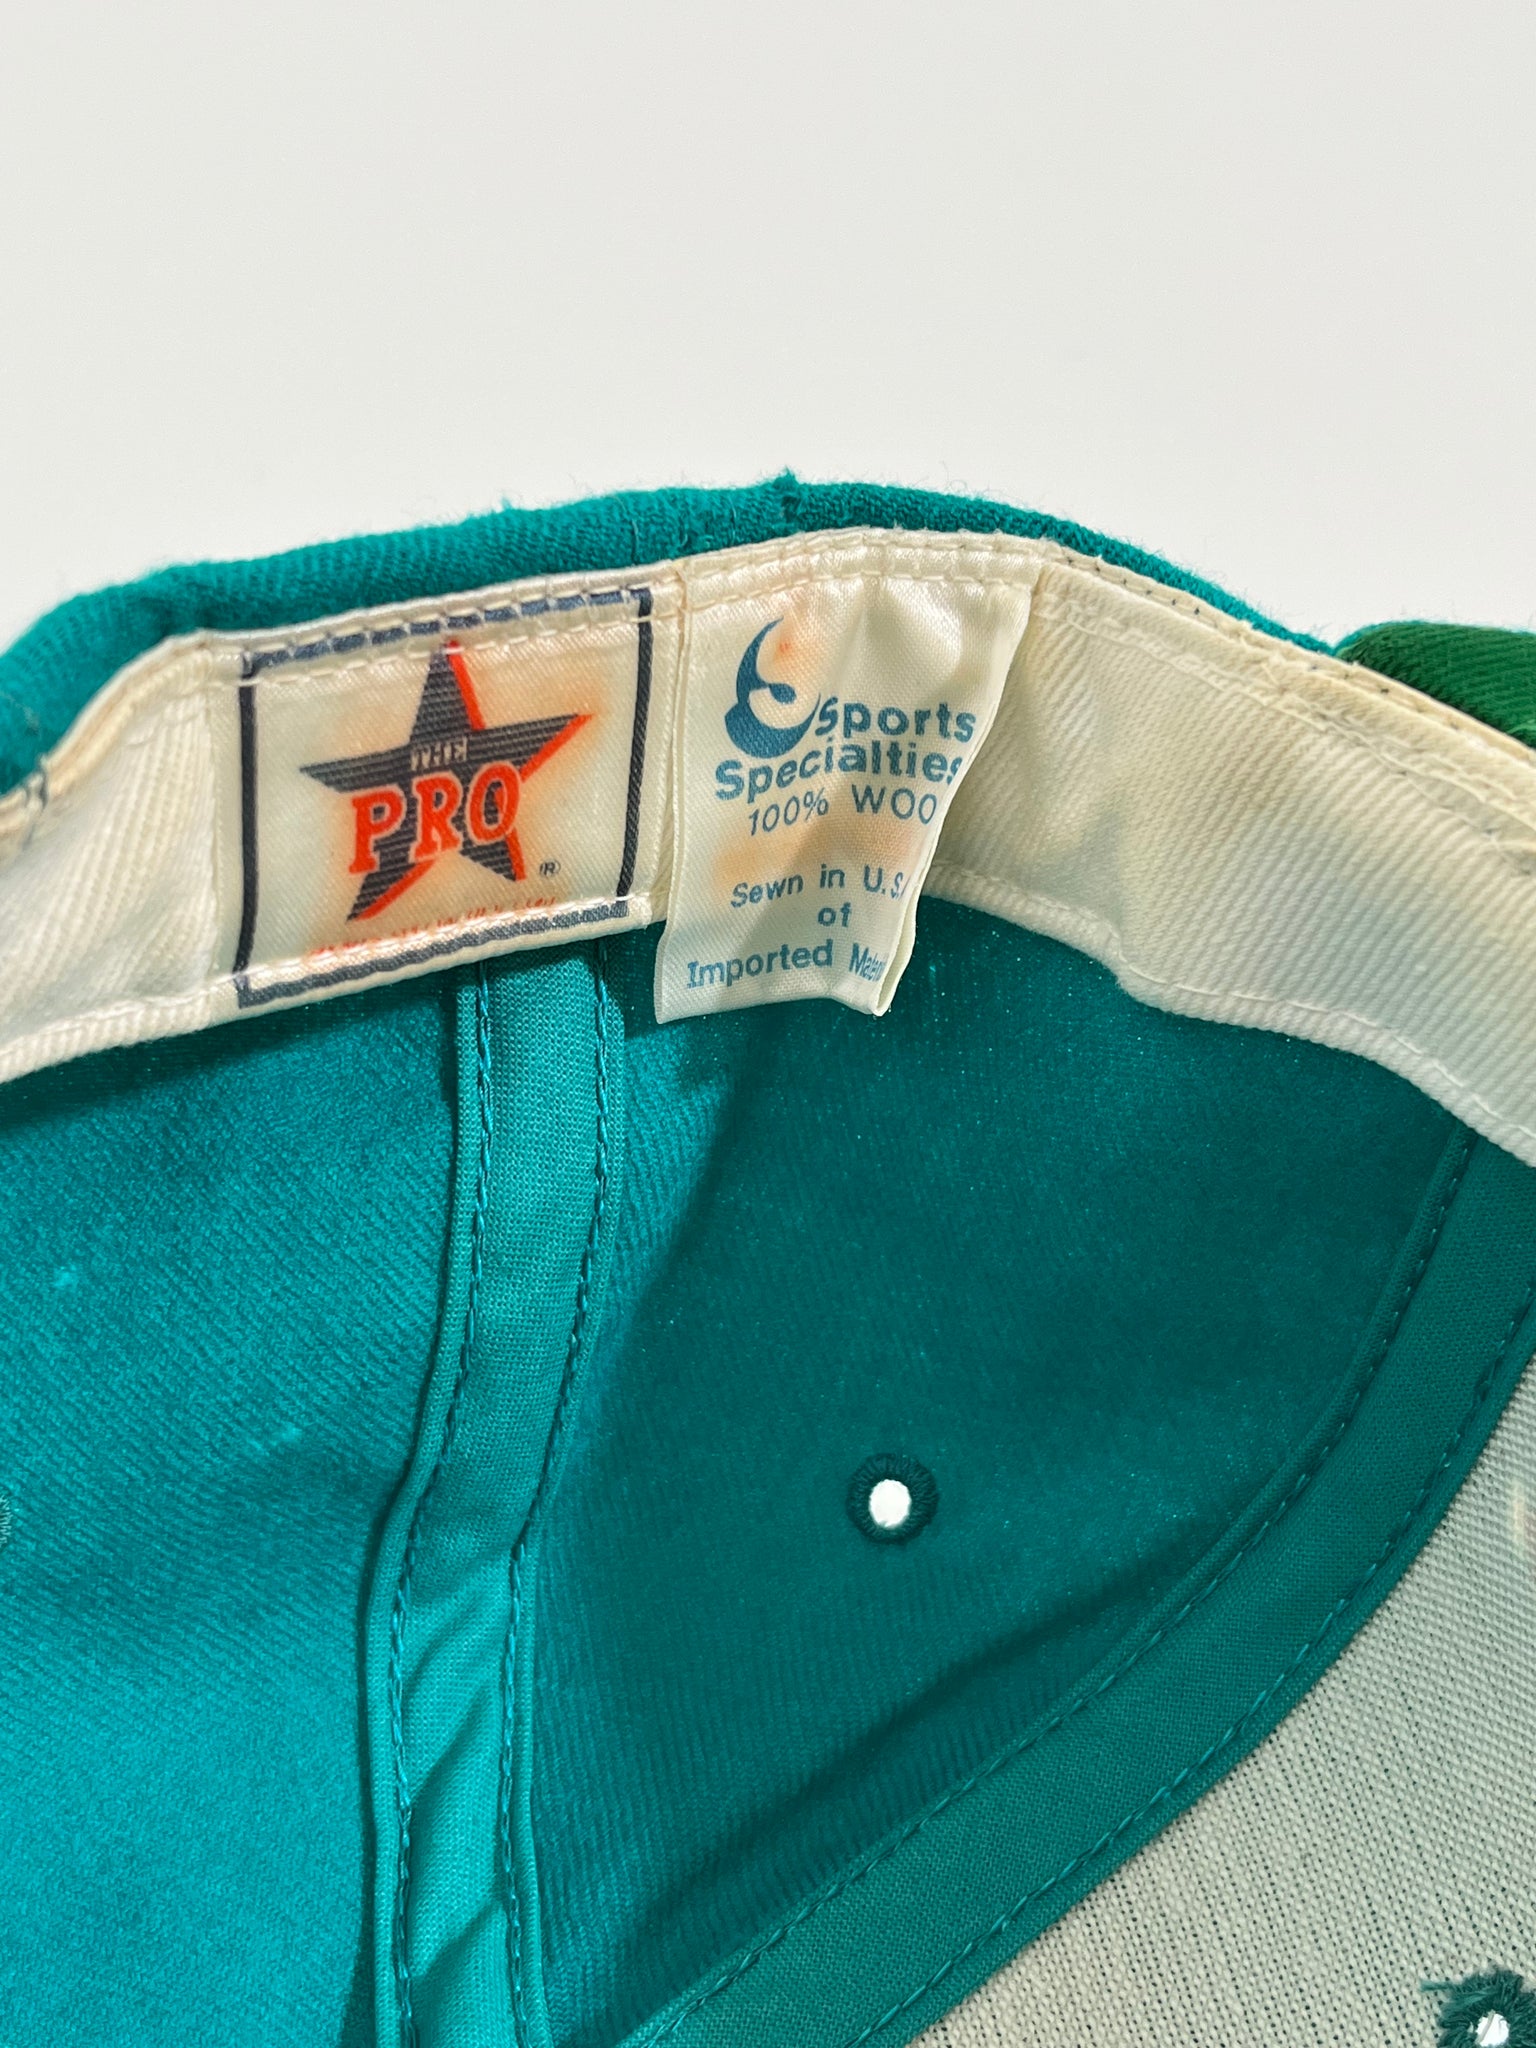 Miami Dolphins Vintage 90s Starter Pinstripe Snapback Hat 